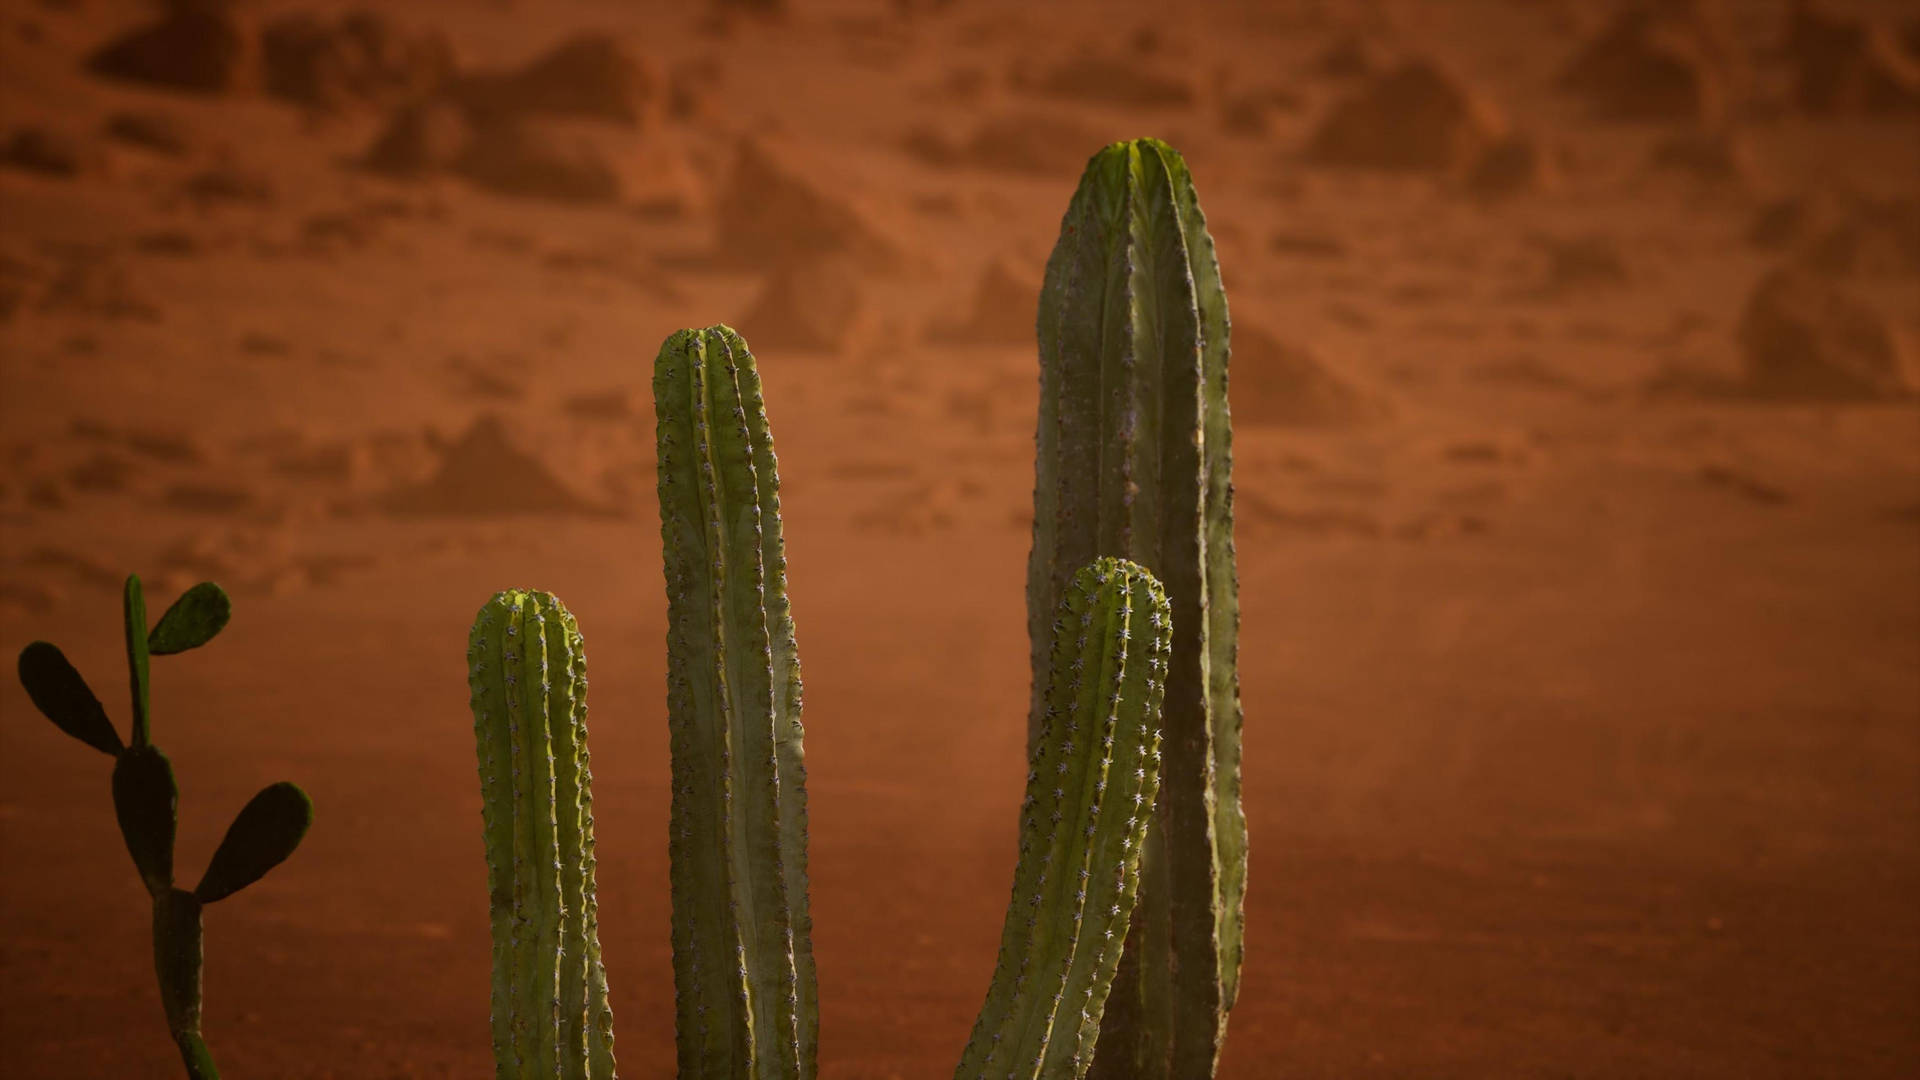 Download Cactus Plant In Arizona Desert Wallpaper | Wallpapers.com